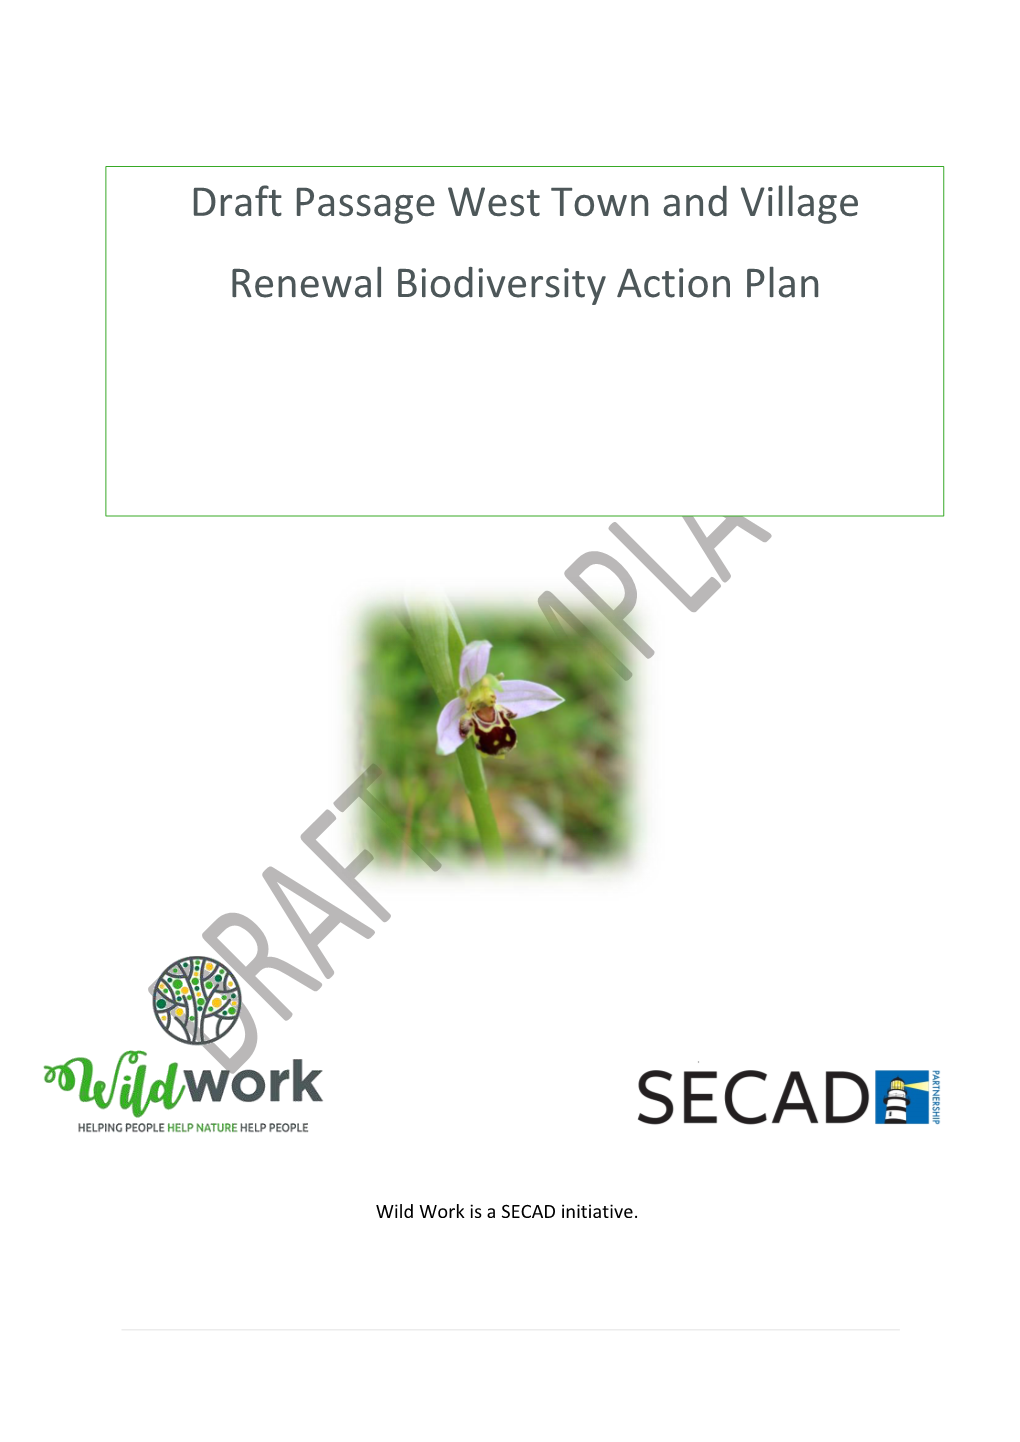 Draft Passage West Town and Village Renewal Biodiversity Action Plan